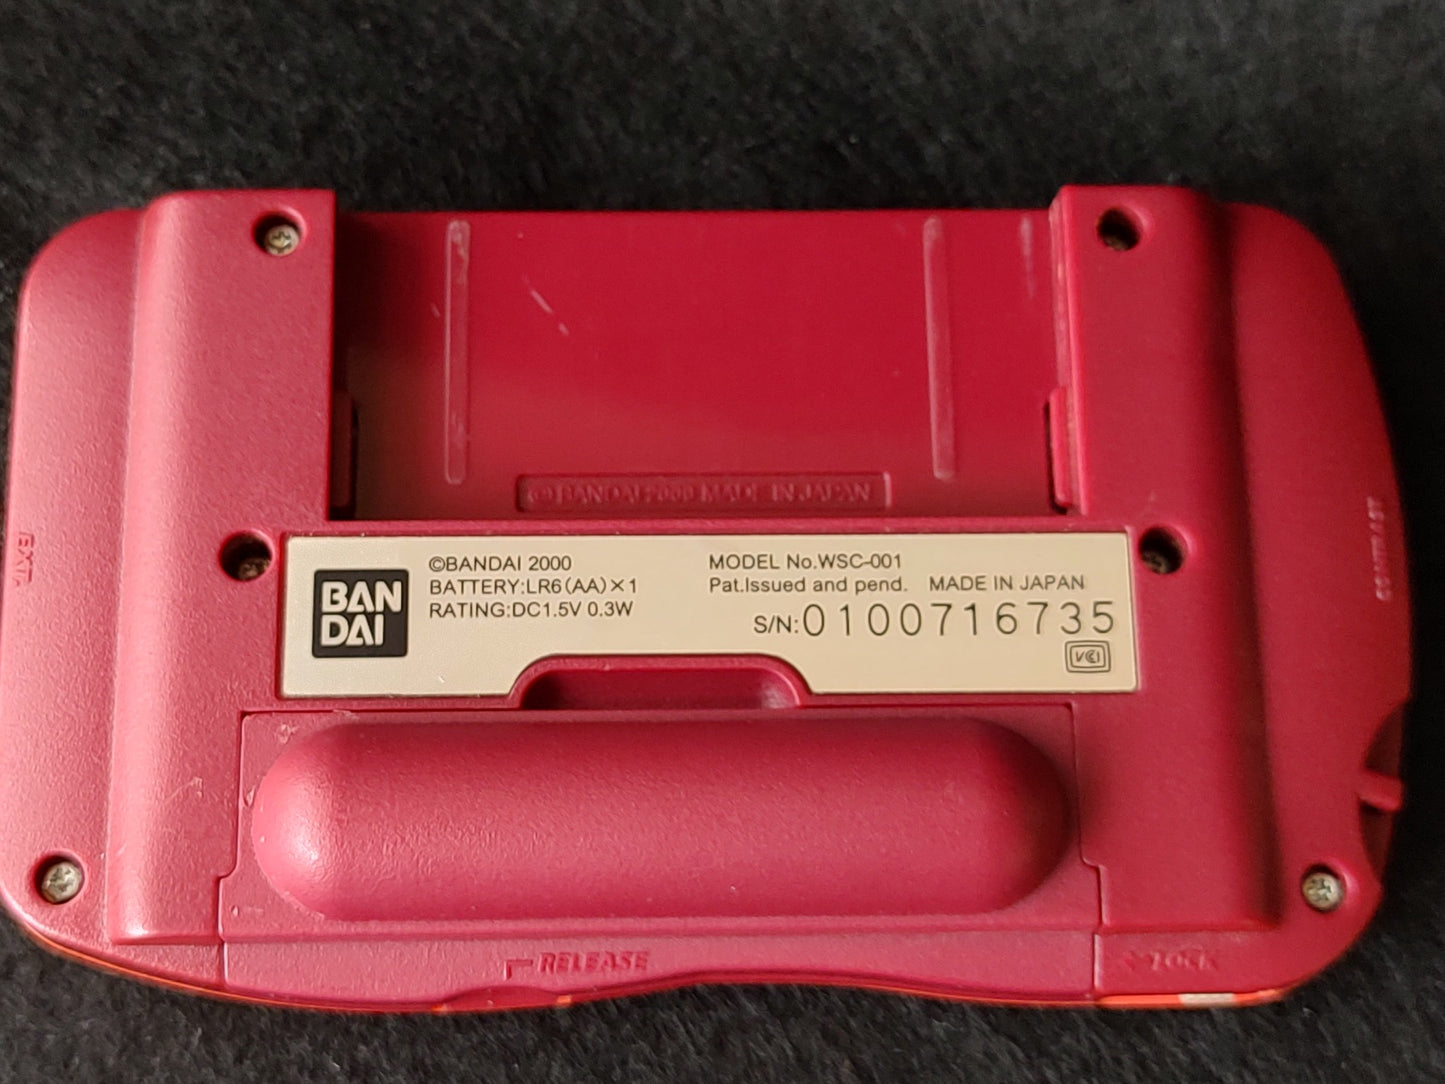 WONDERSWAN Color Console GUNDAM CHAR's ZAKU II Red Ver. w/manual, box set-e0519-